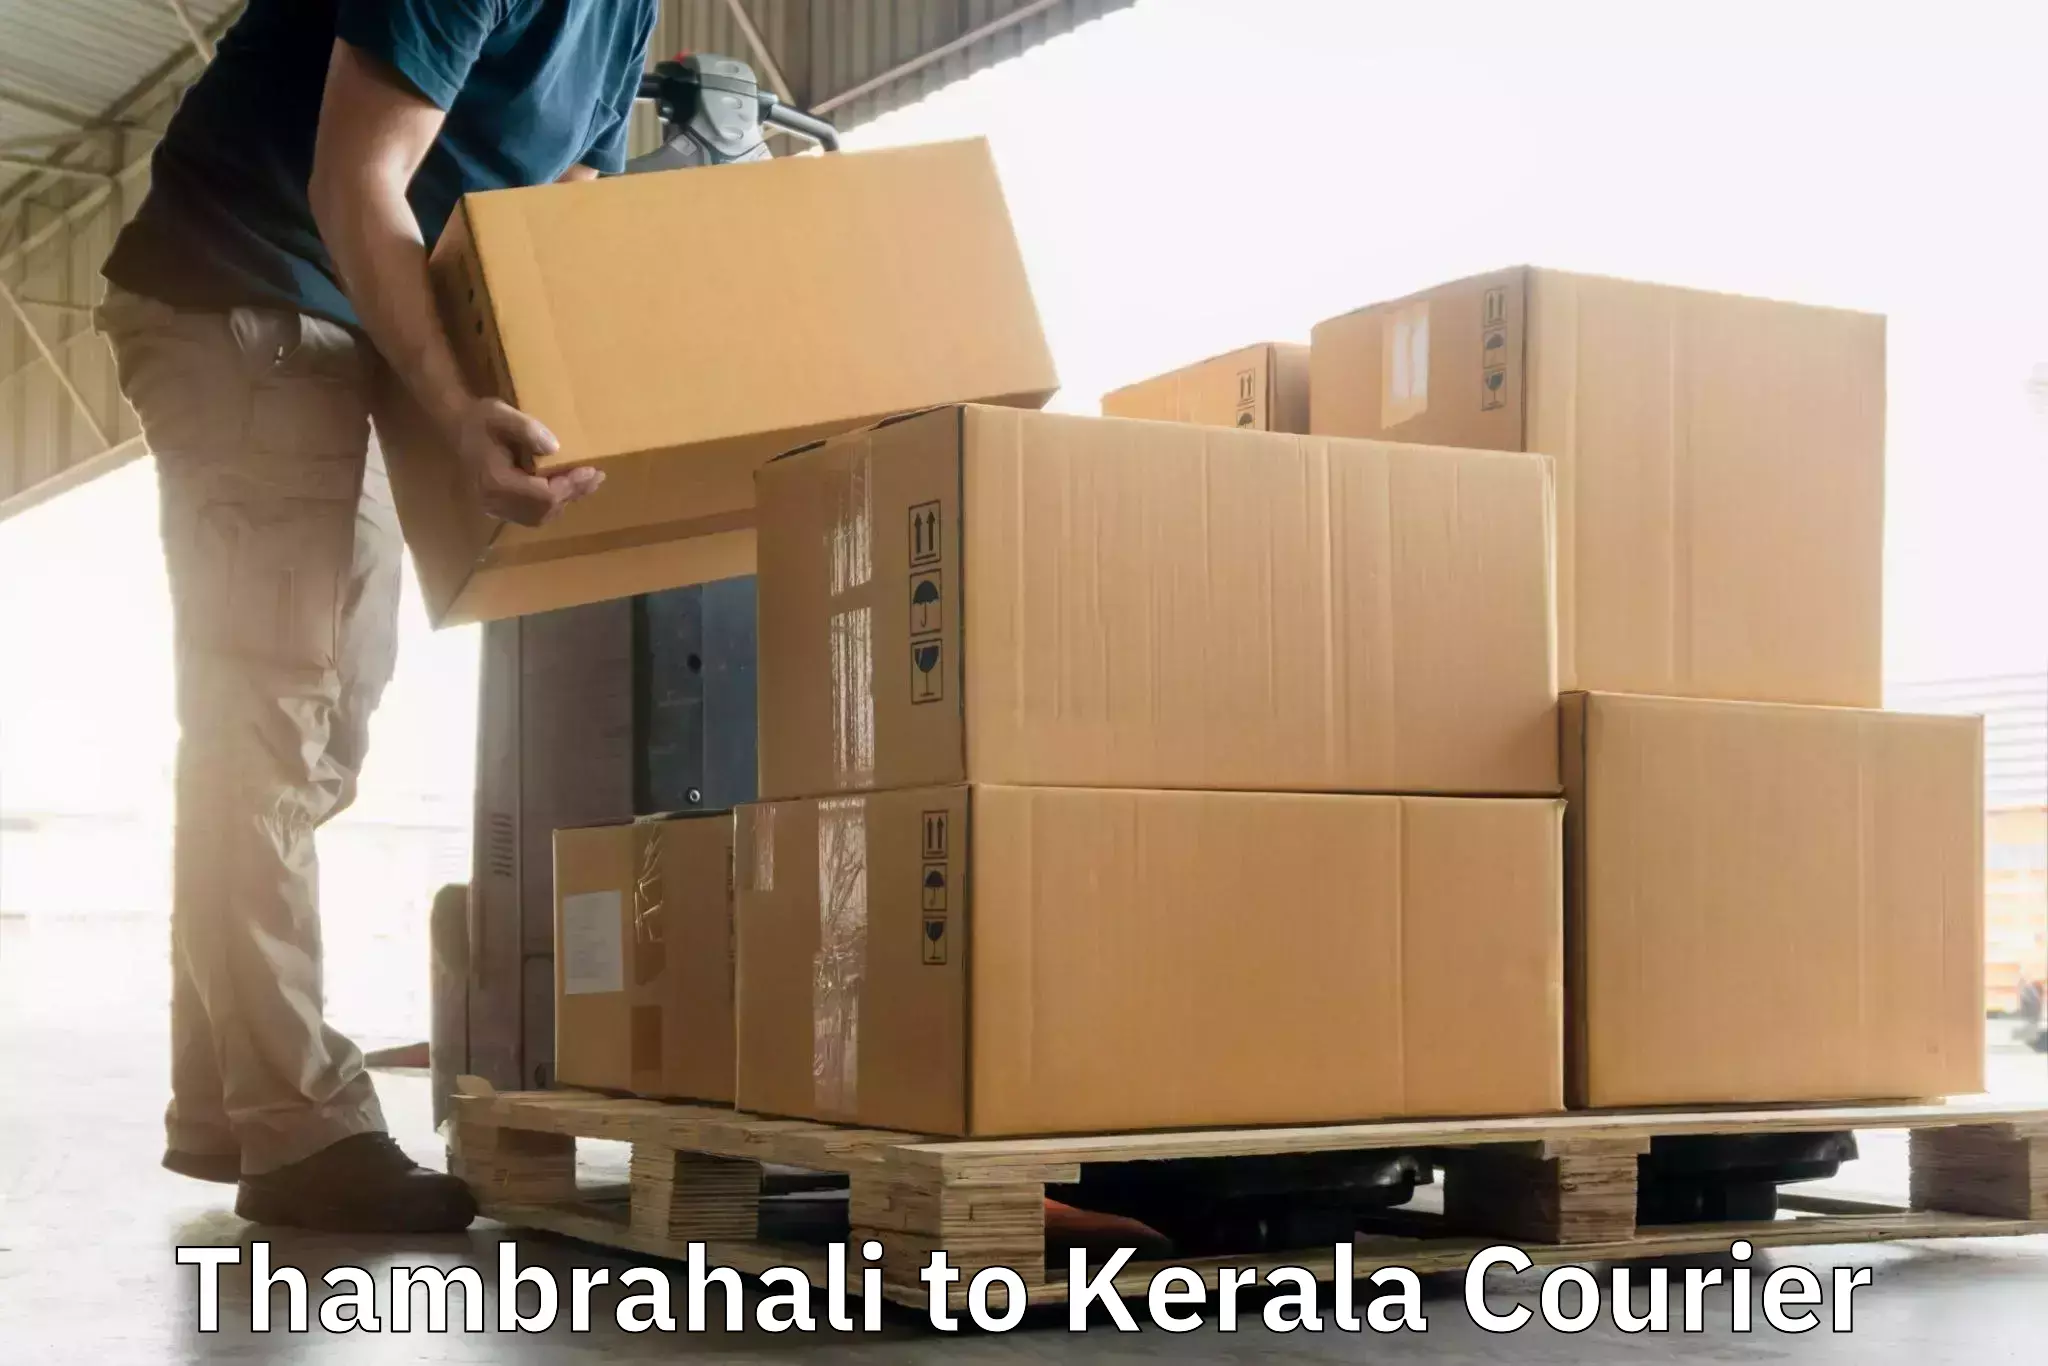 Courier service comparison Thambrahali to Chervathur